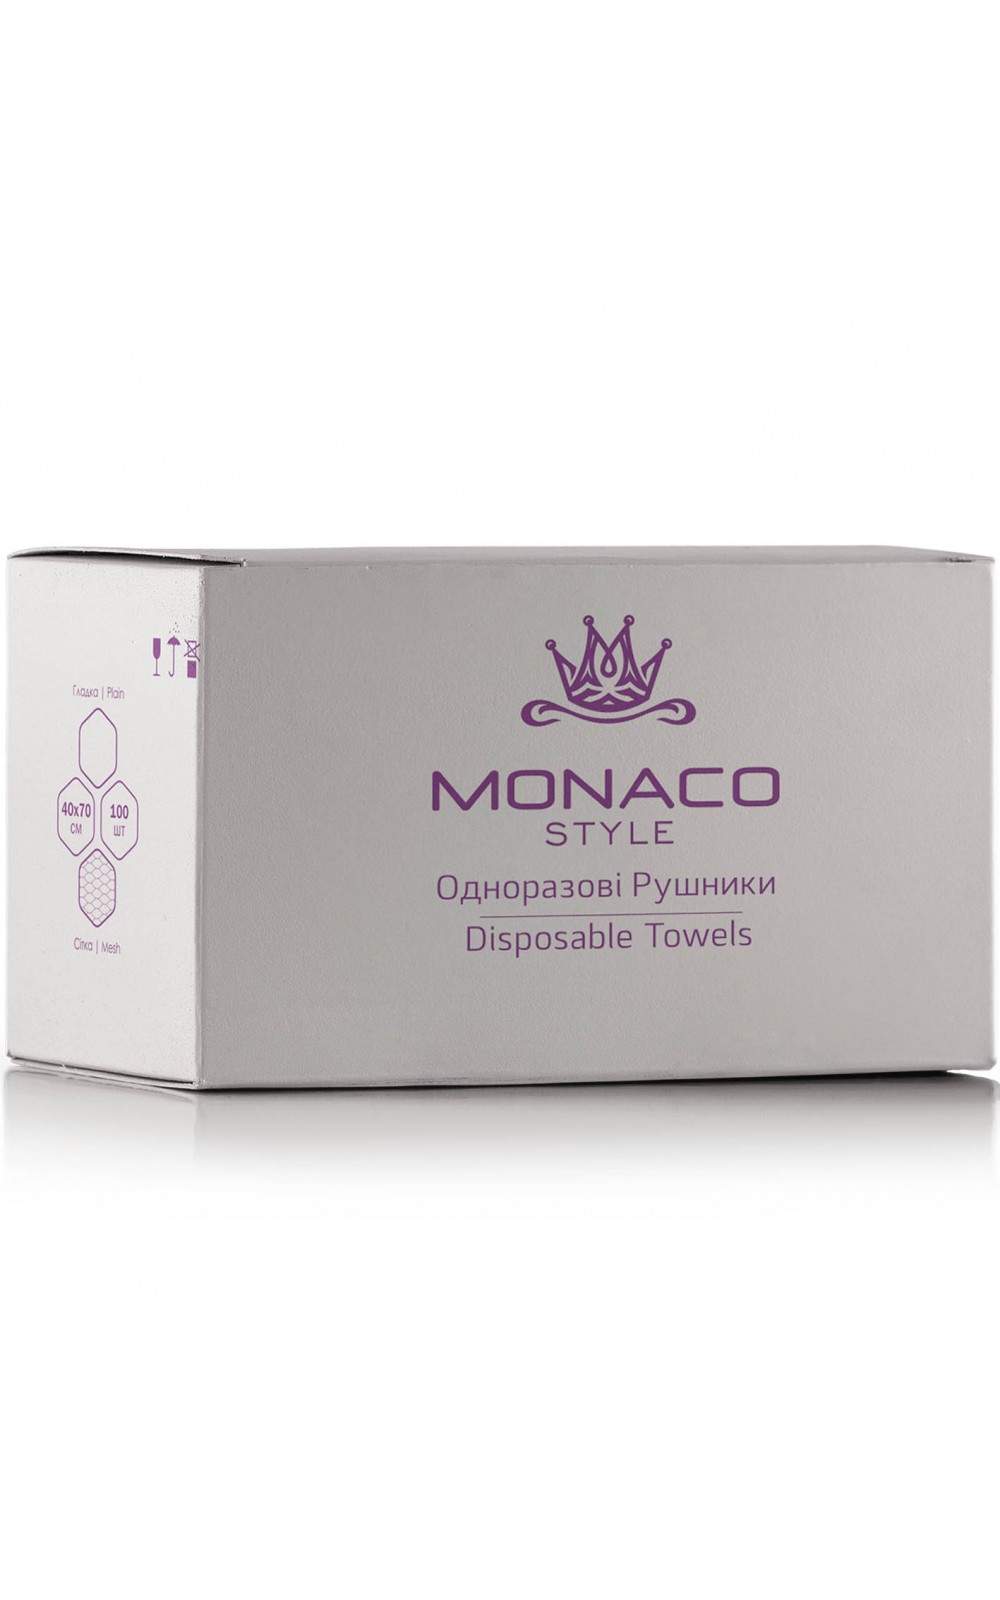 Monaco Style, Рушник, 40см х 70см (100шт. складені), гладкий 